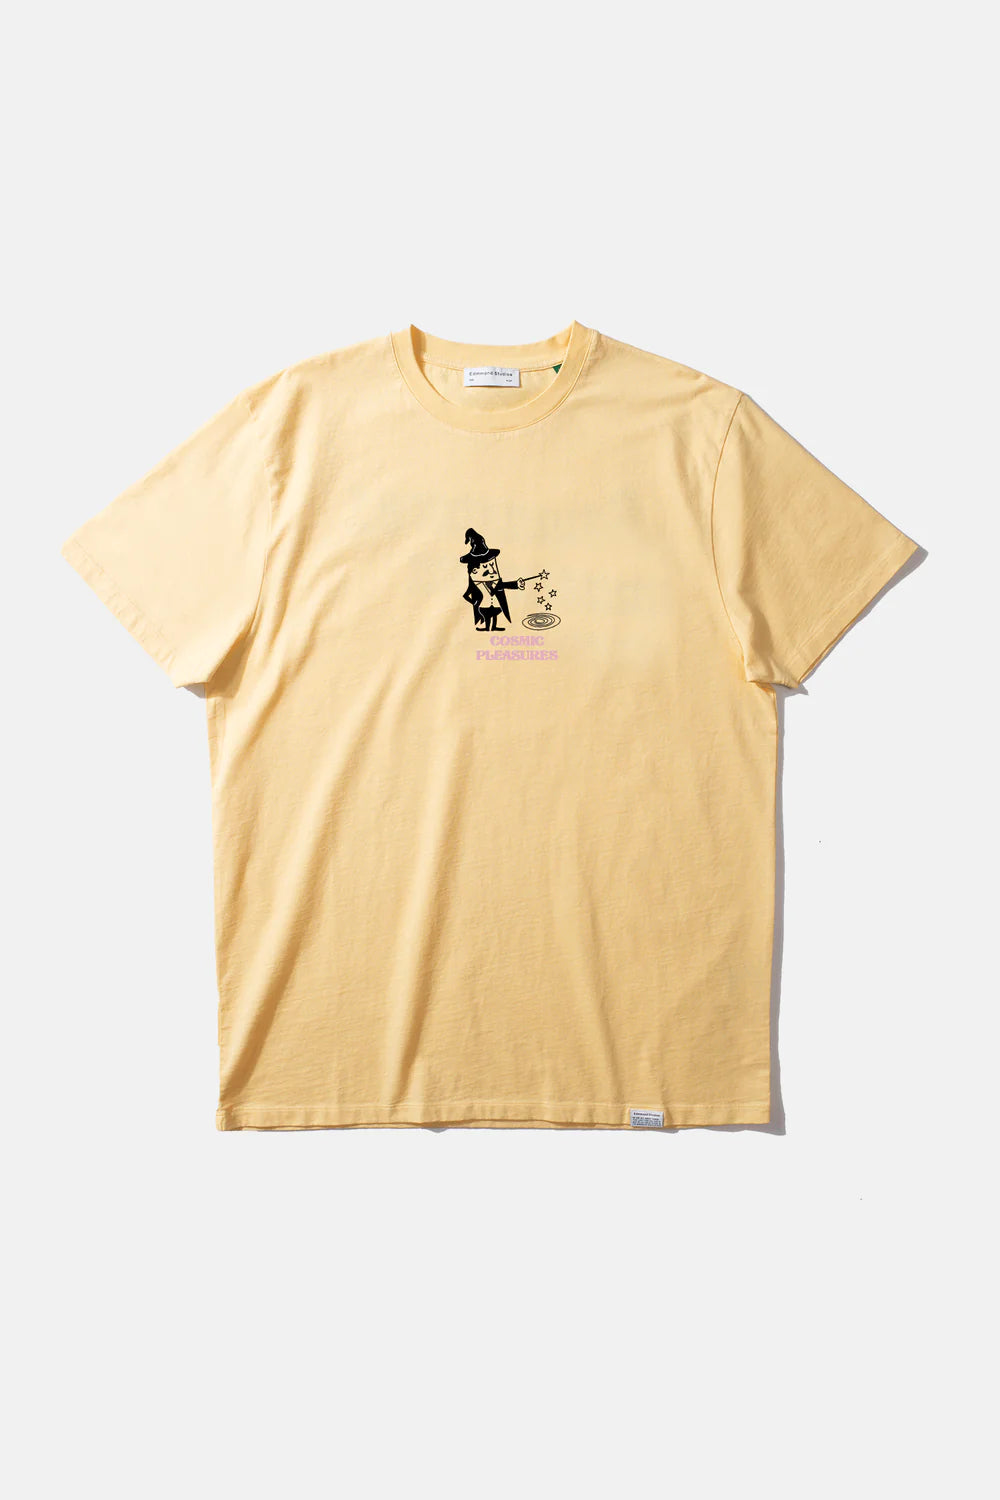 Edmmond Studios Cosmic Pleasures Plain Light Yellow T-Shirt